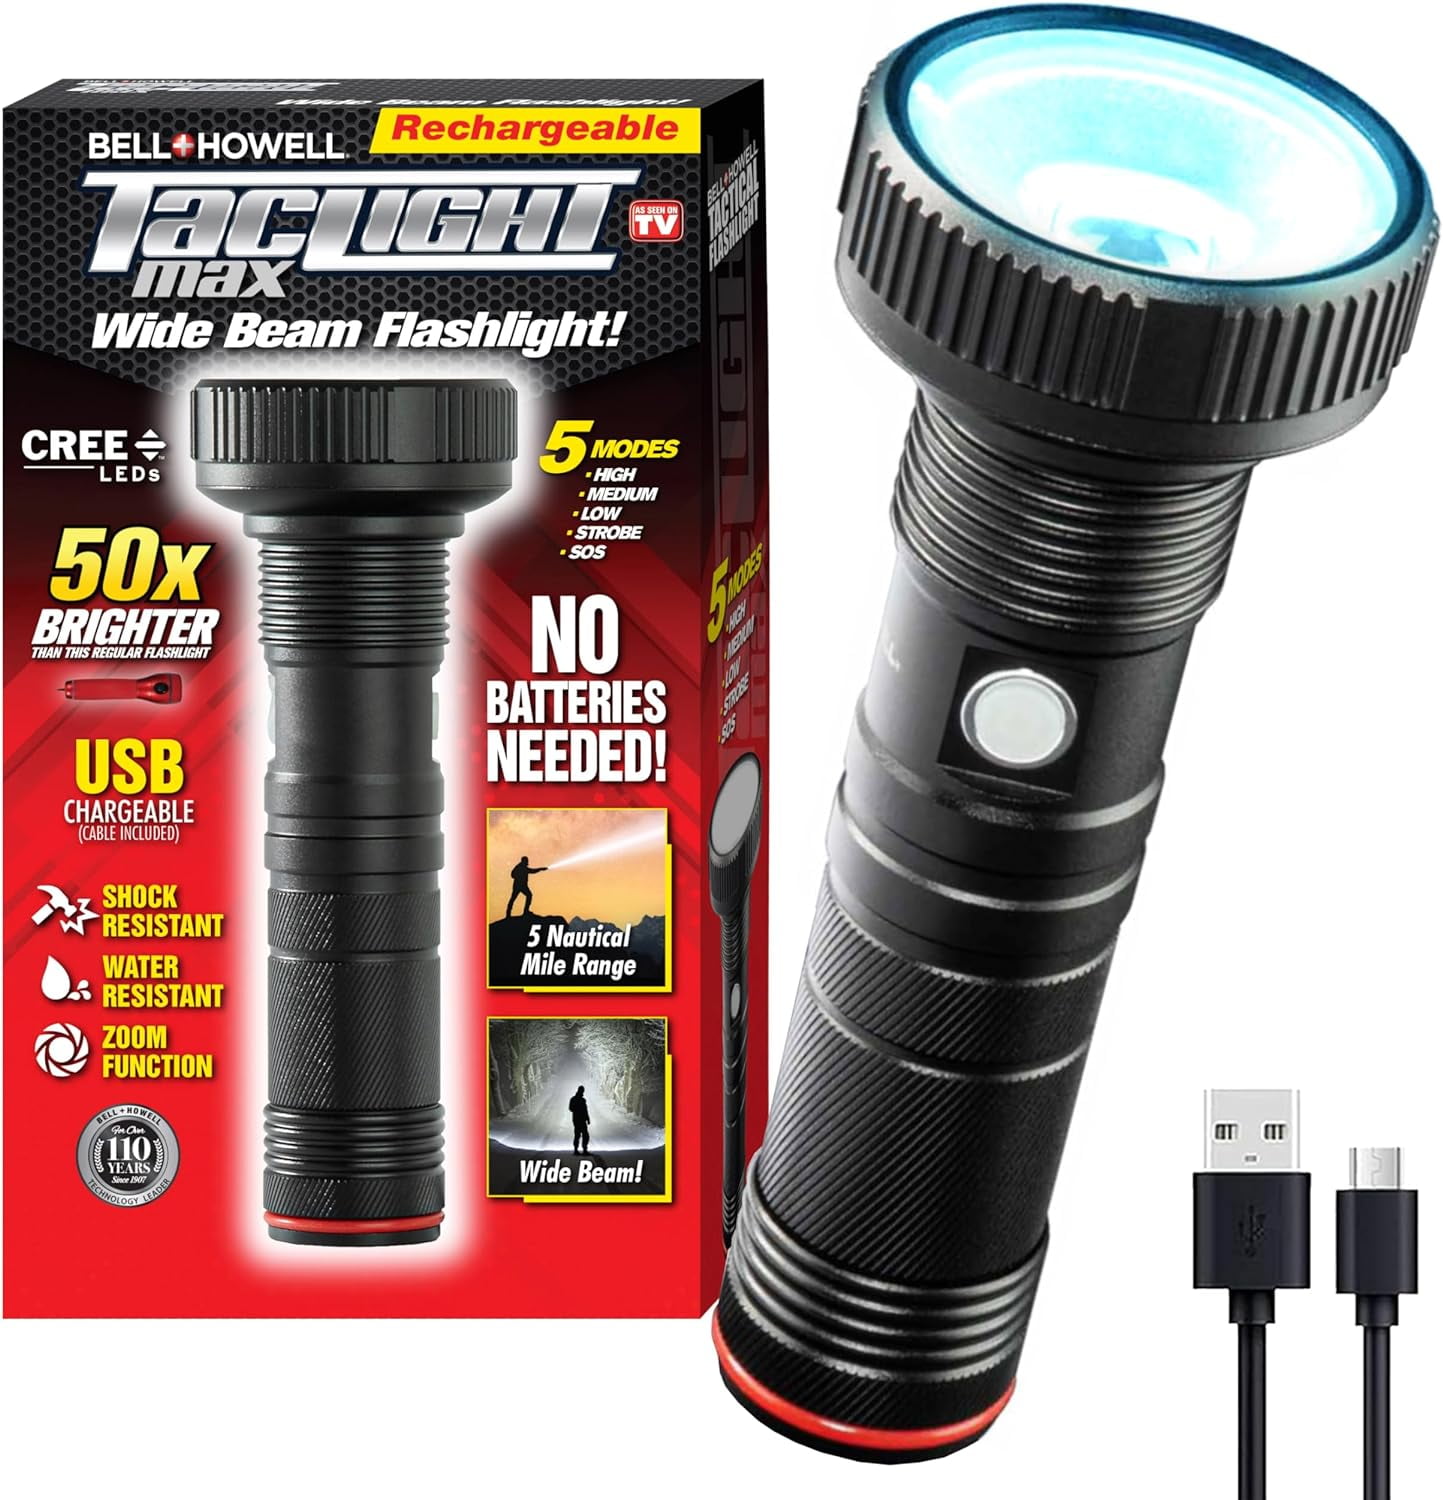 Bell+Howell Taclight Max Flashlight